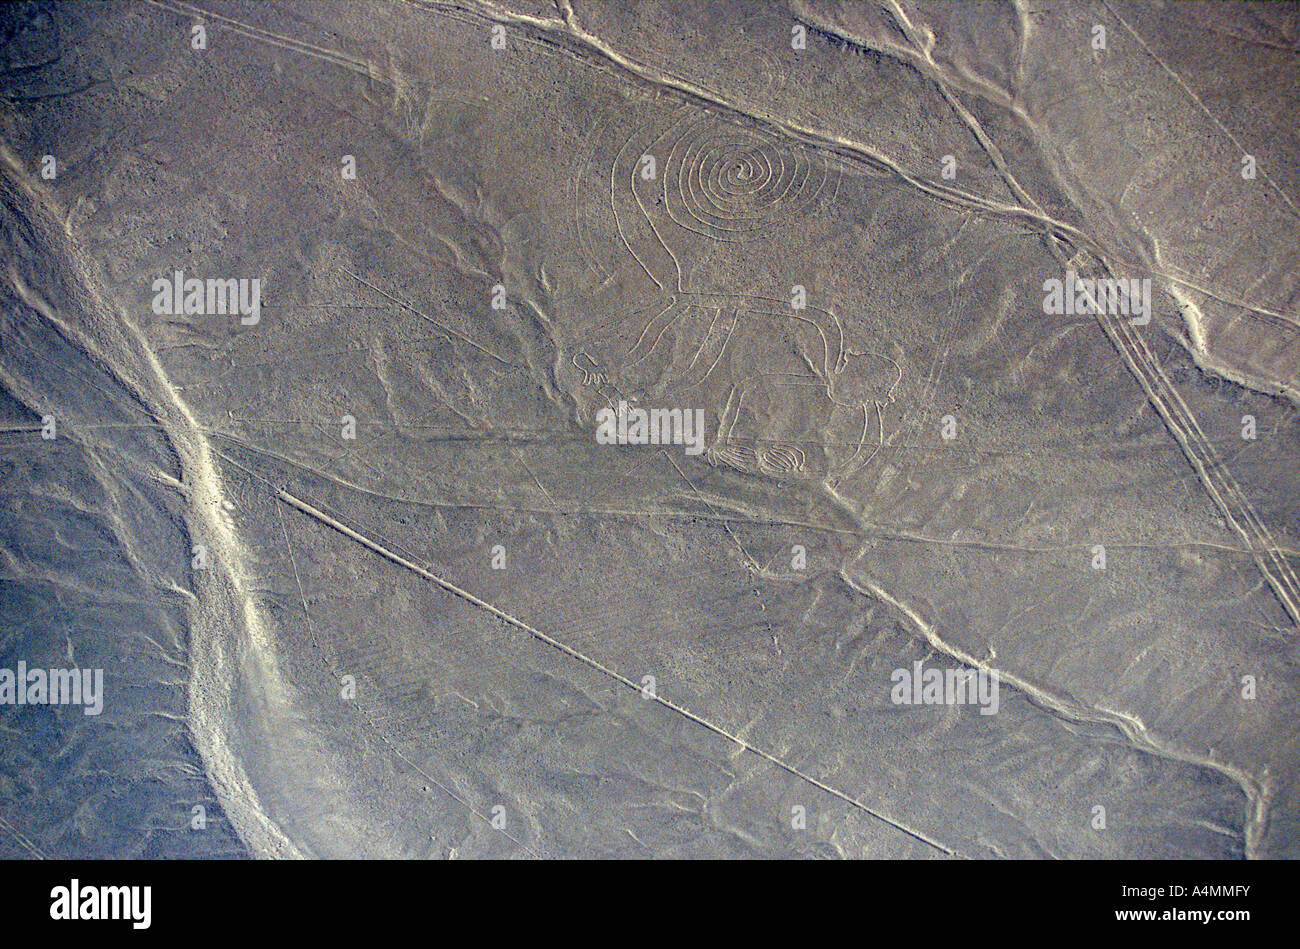 Die Linien von Nasca: hier der Affe (Ica - Peru). Géoglyphes de Nazca, le Singe (Ica - Pérou). Stockfoto